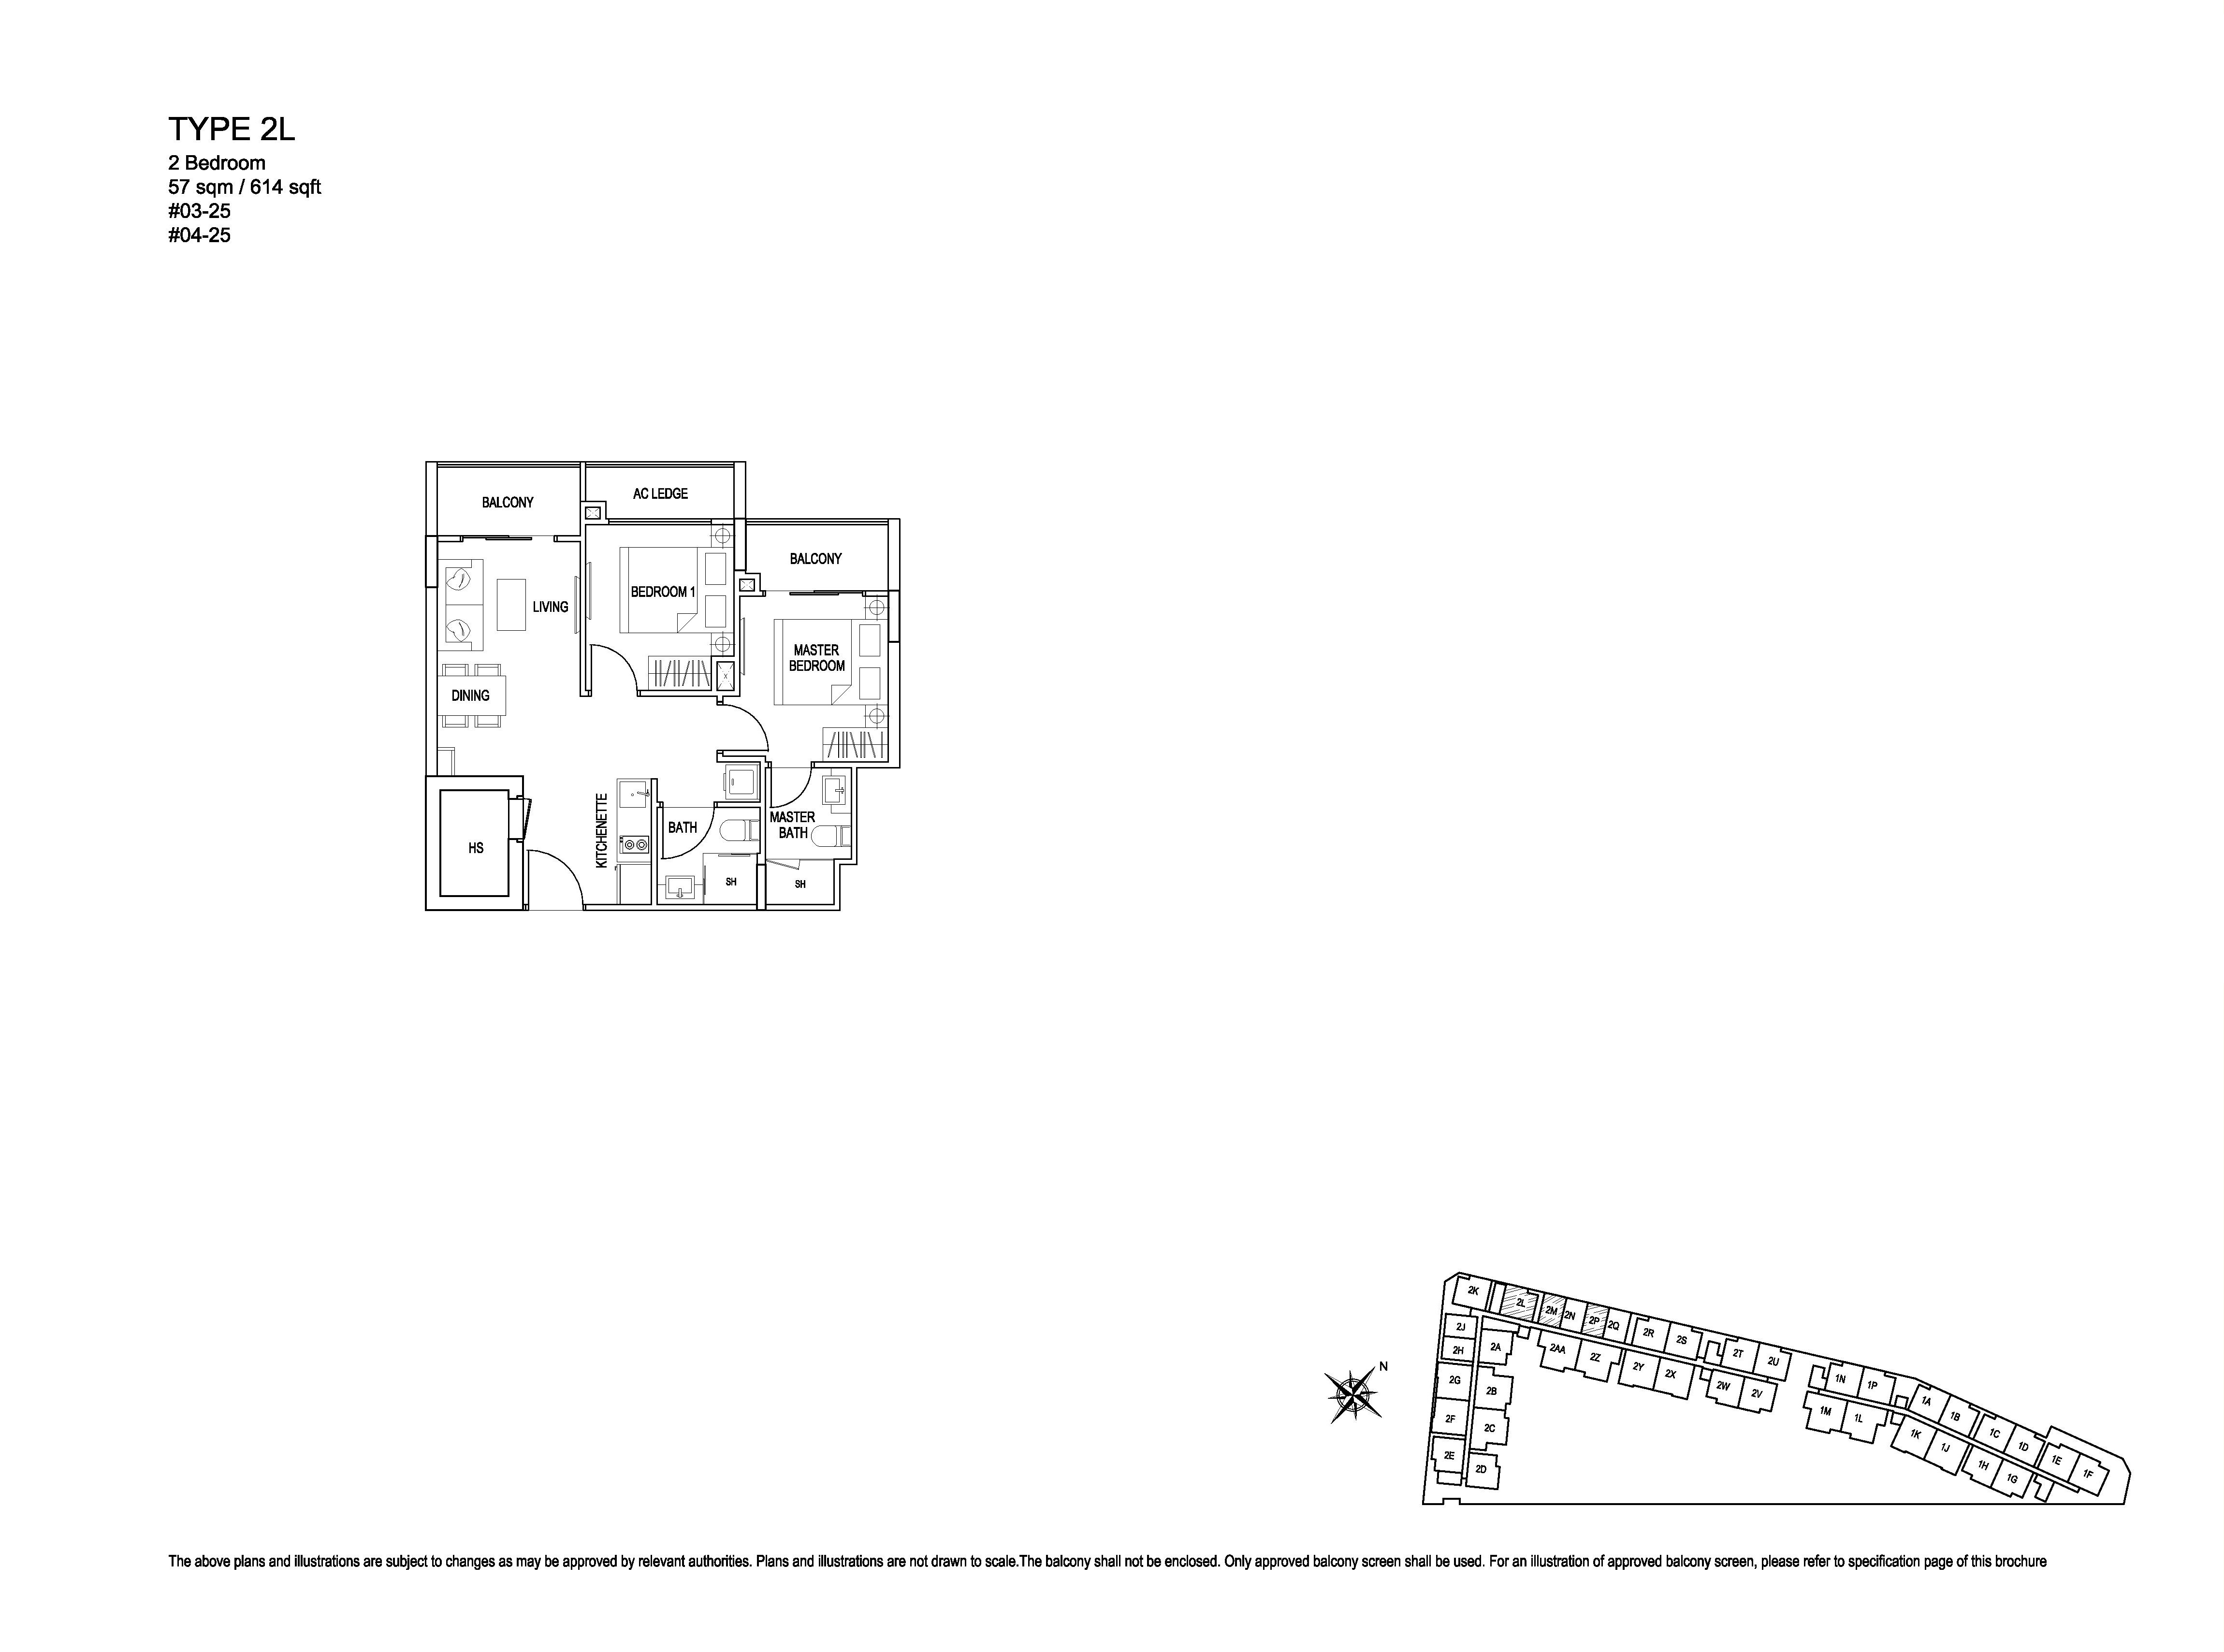 Kensington Square 2 Bedroom Floor Plans Type 2L